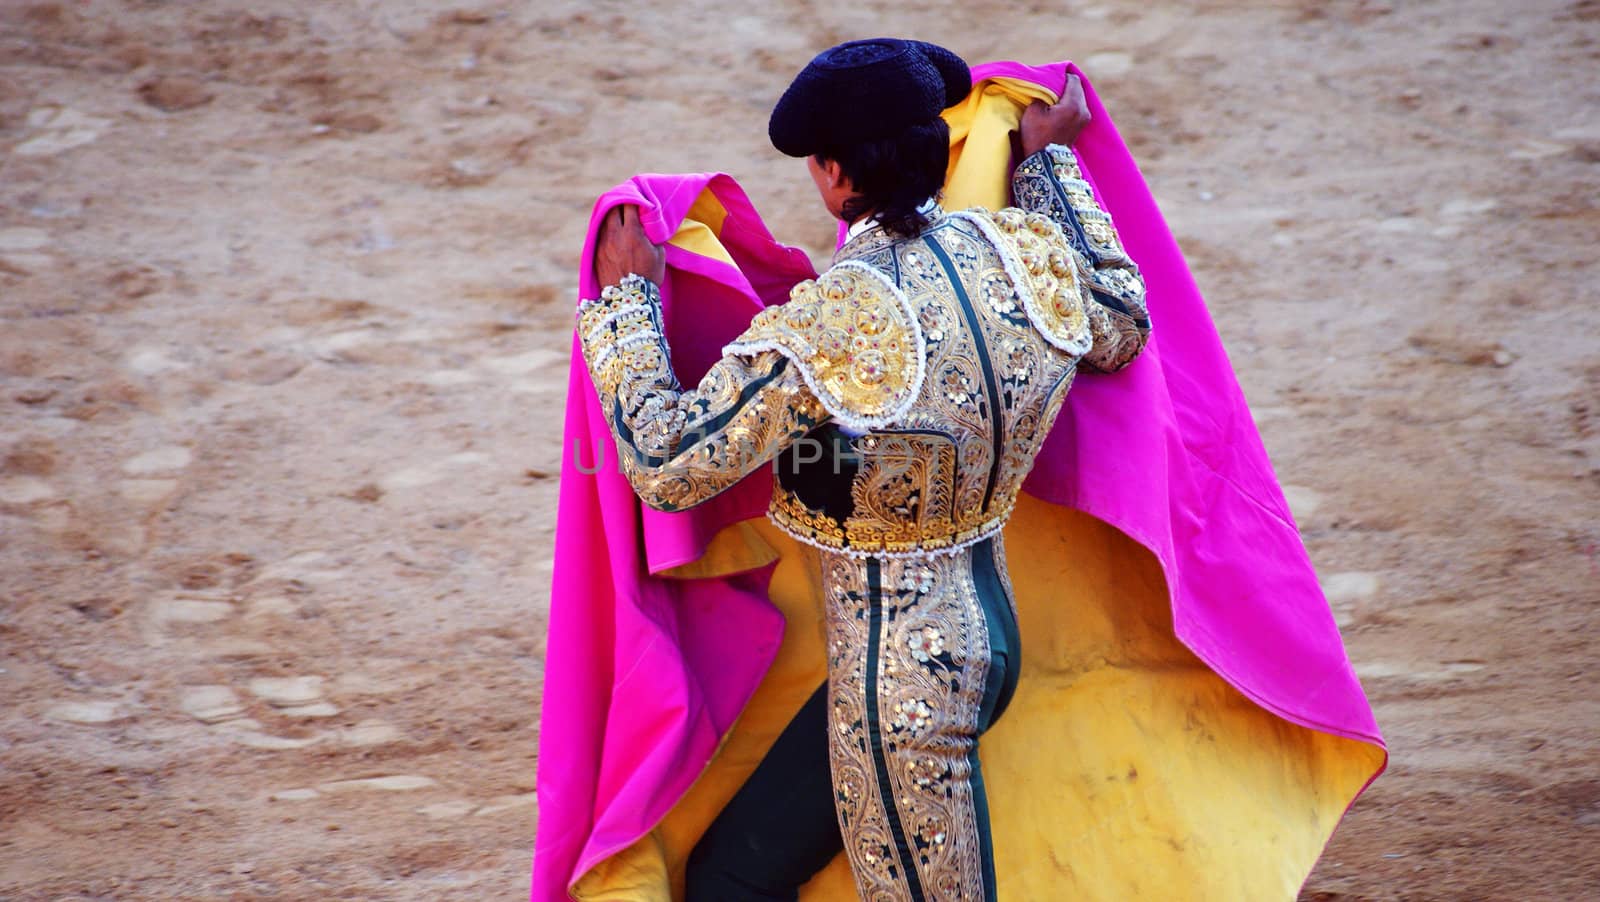 Traditional corrida bullfighting in spain by merc67